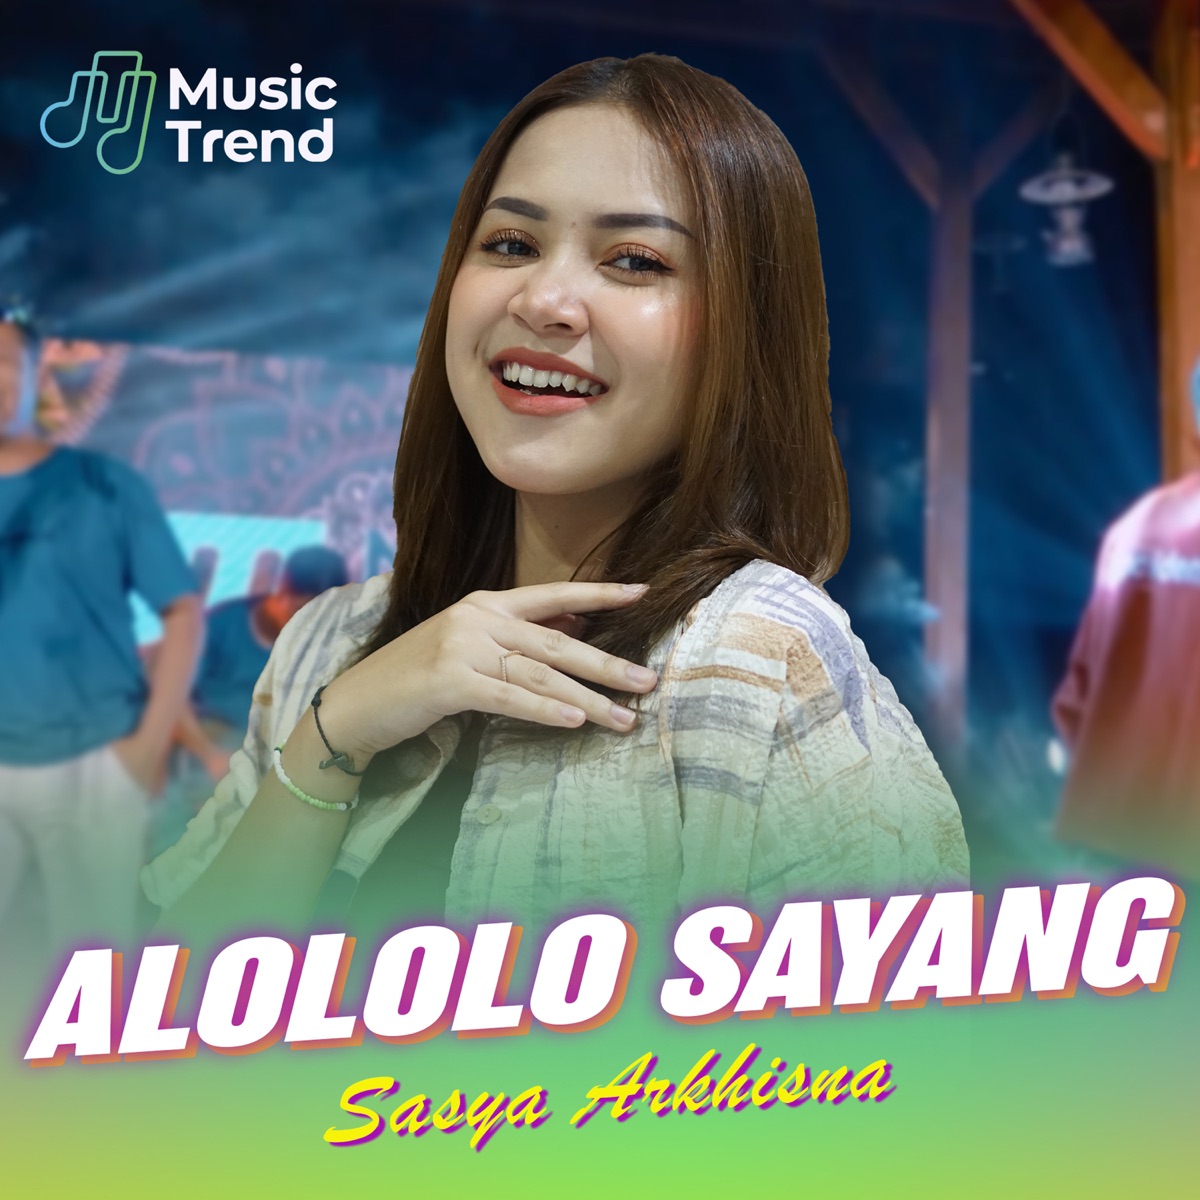 Alololo Sayang - Single - Album by Sasya Arkhisna - Apple Music